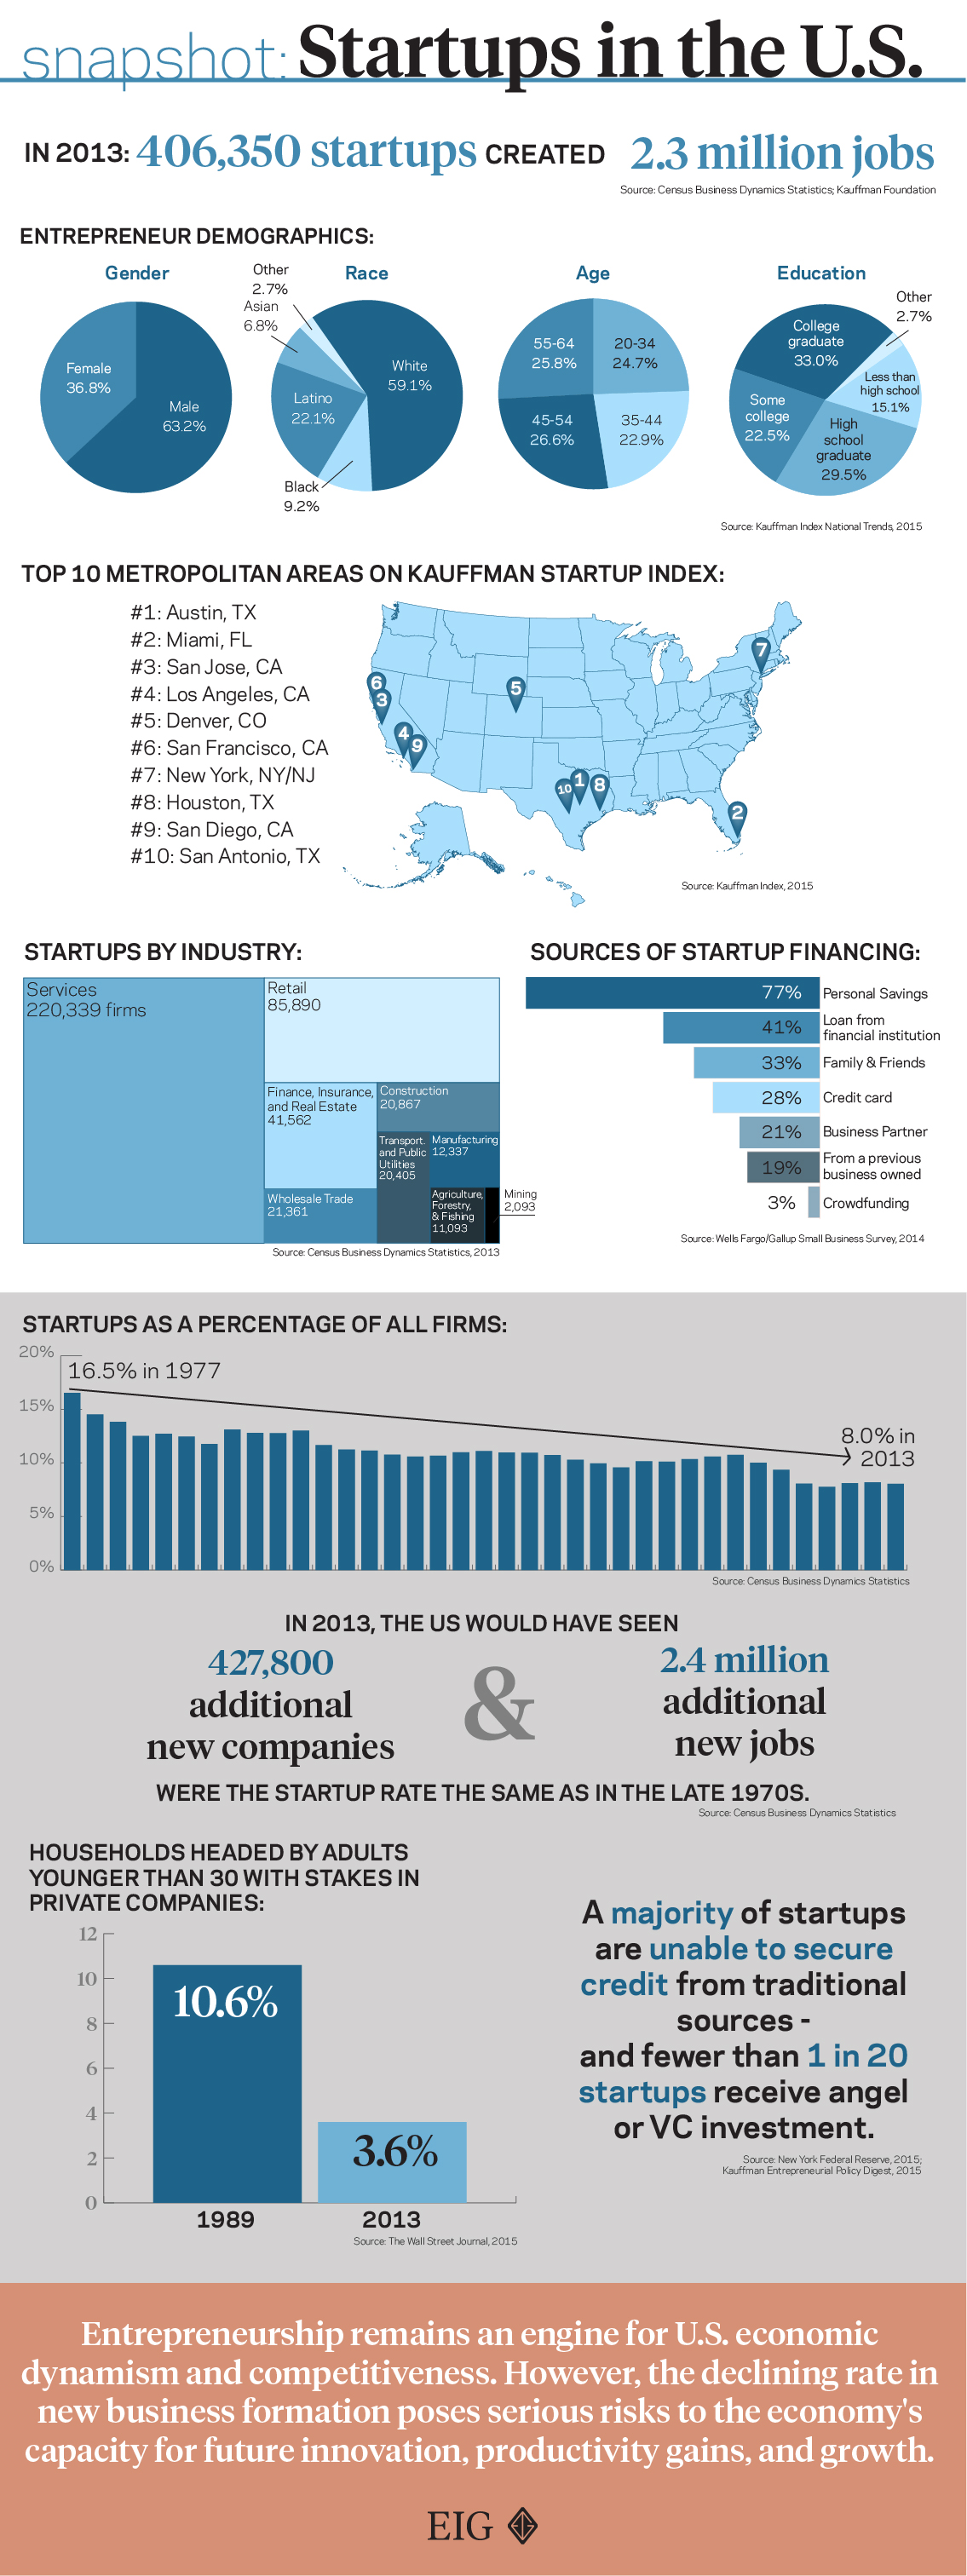 Snapshot: Startups in the U.S.